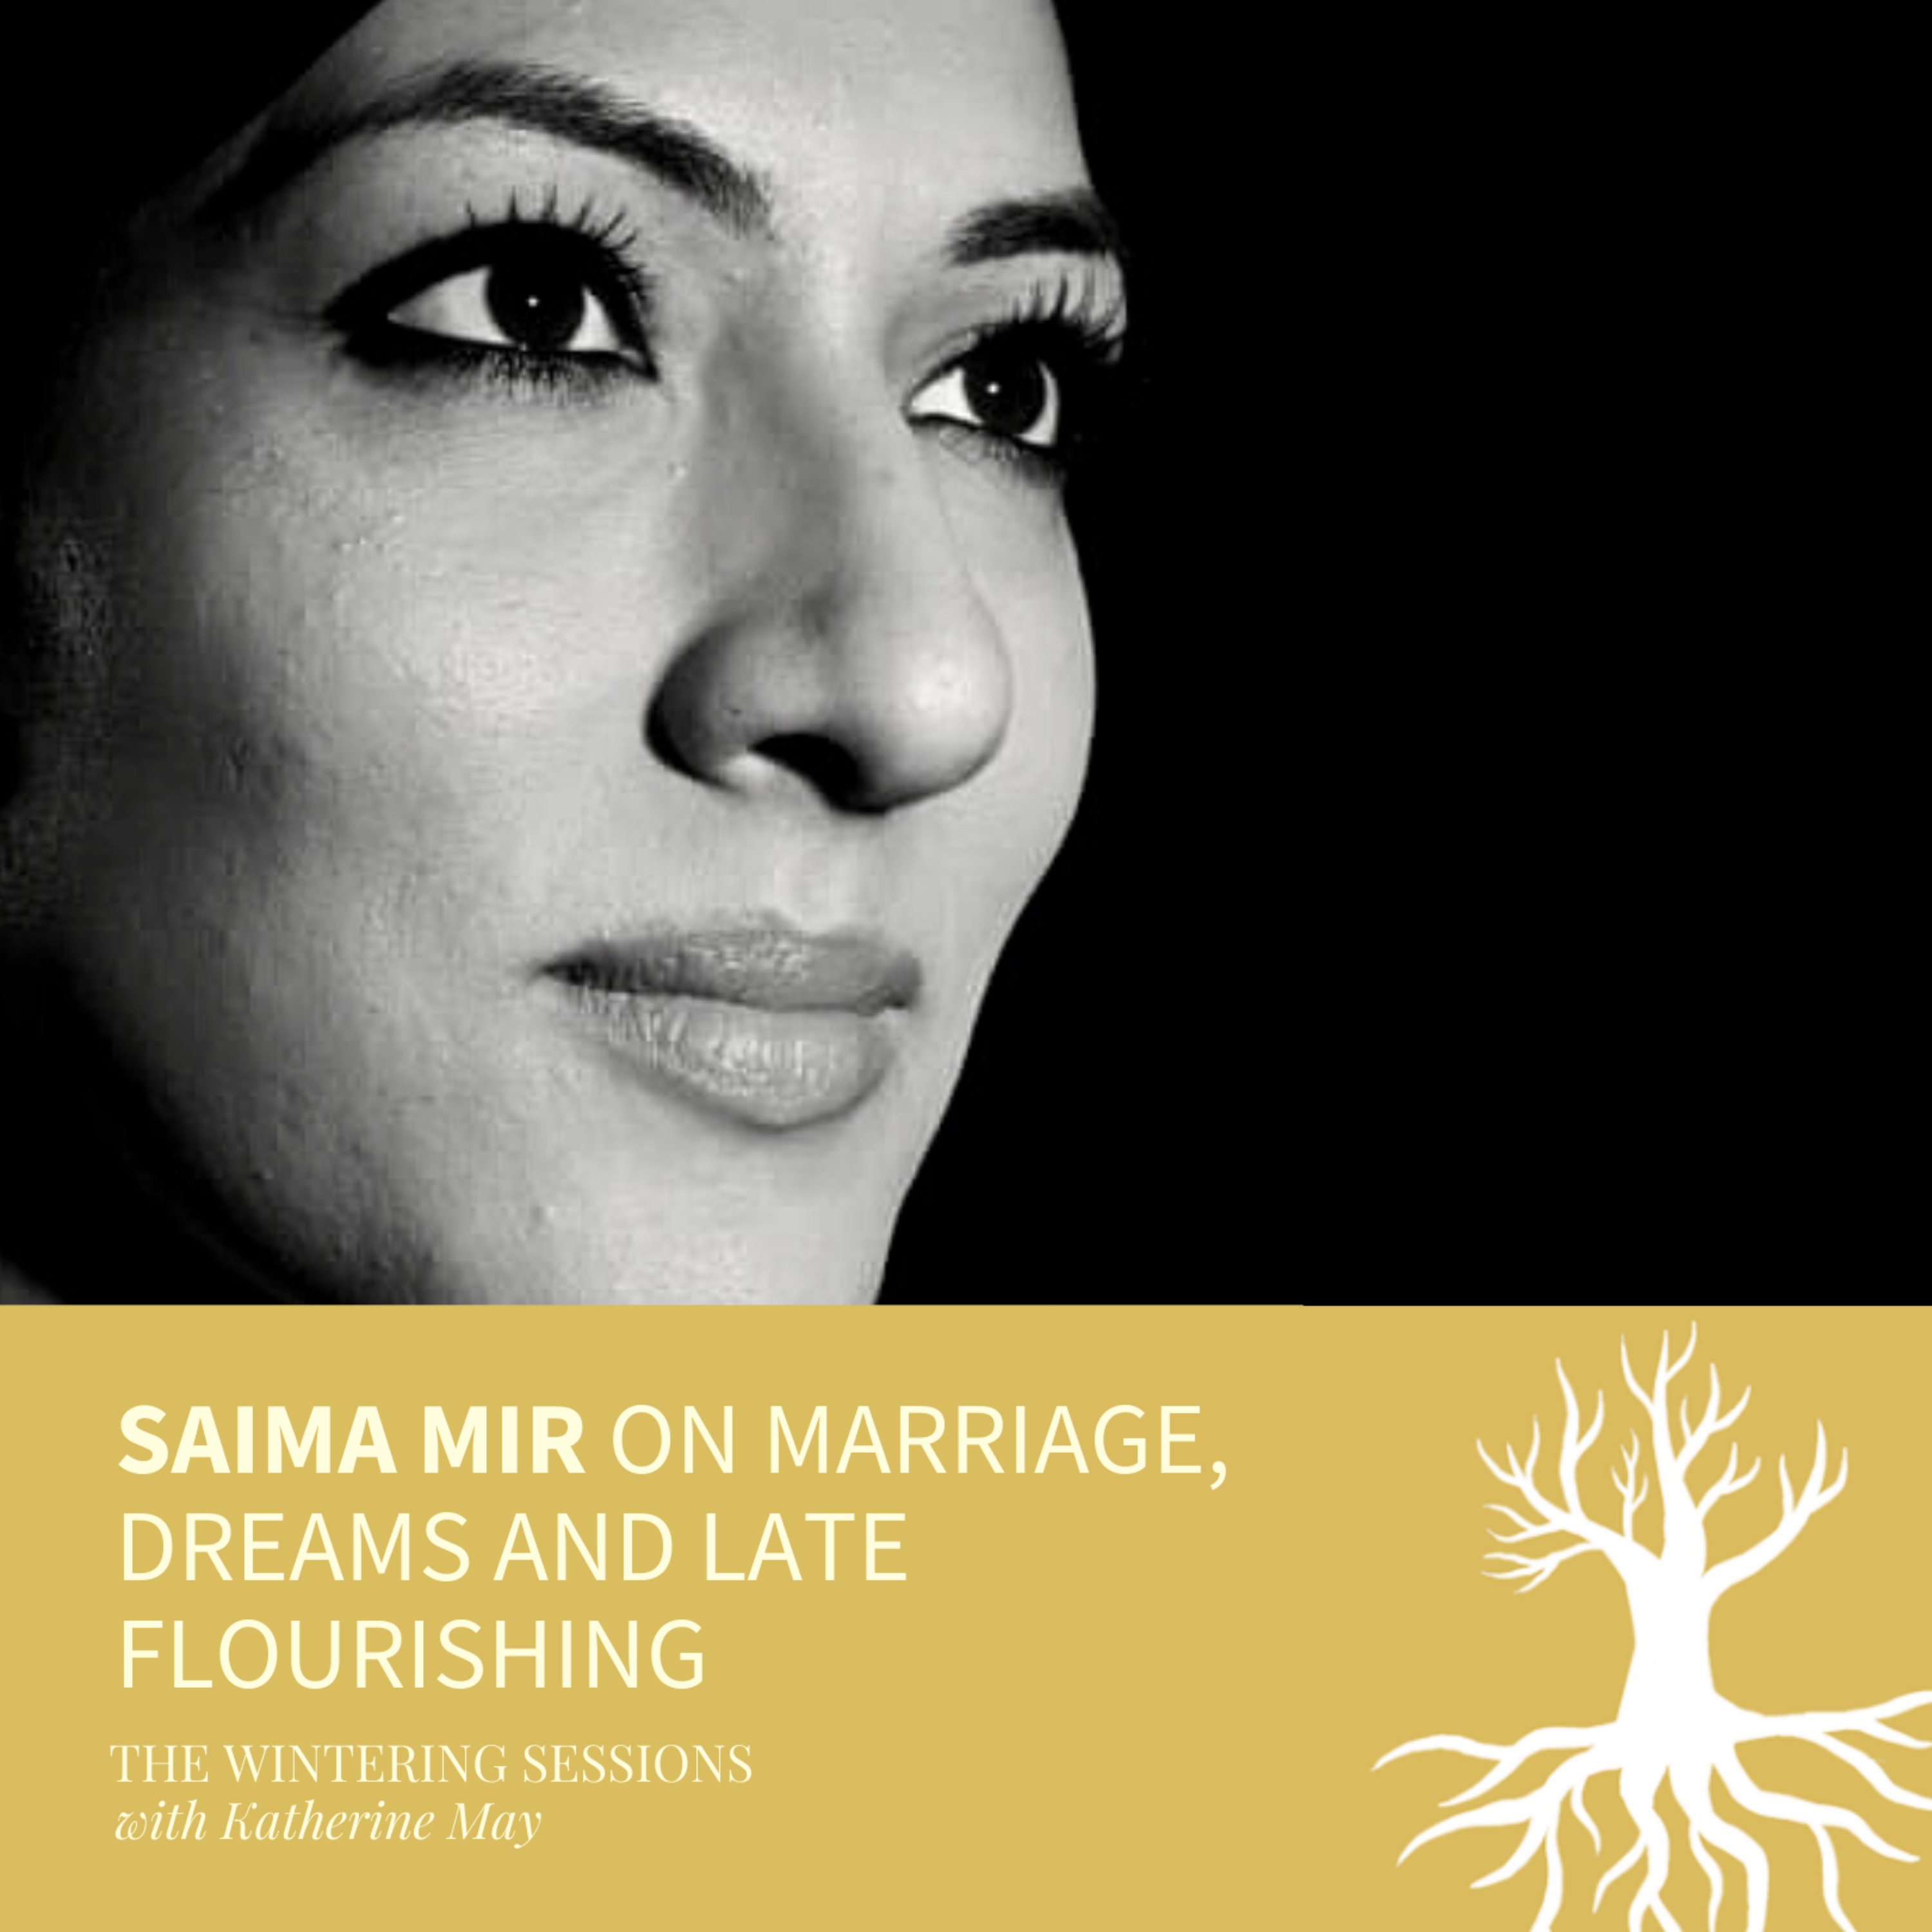 Saima Mir on marriage, dreams and late flourishing